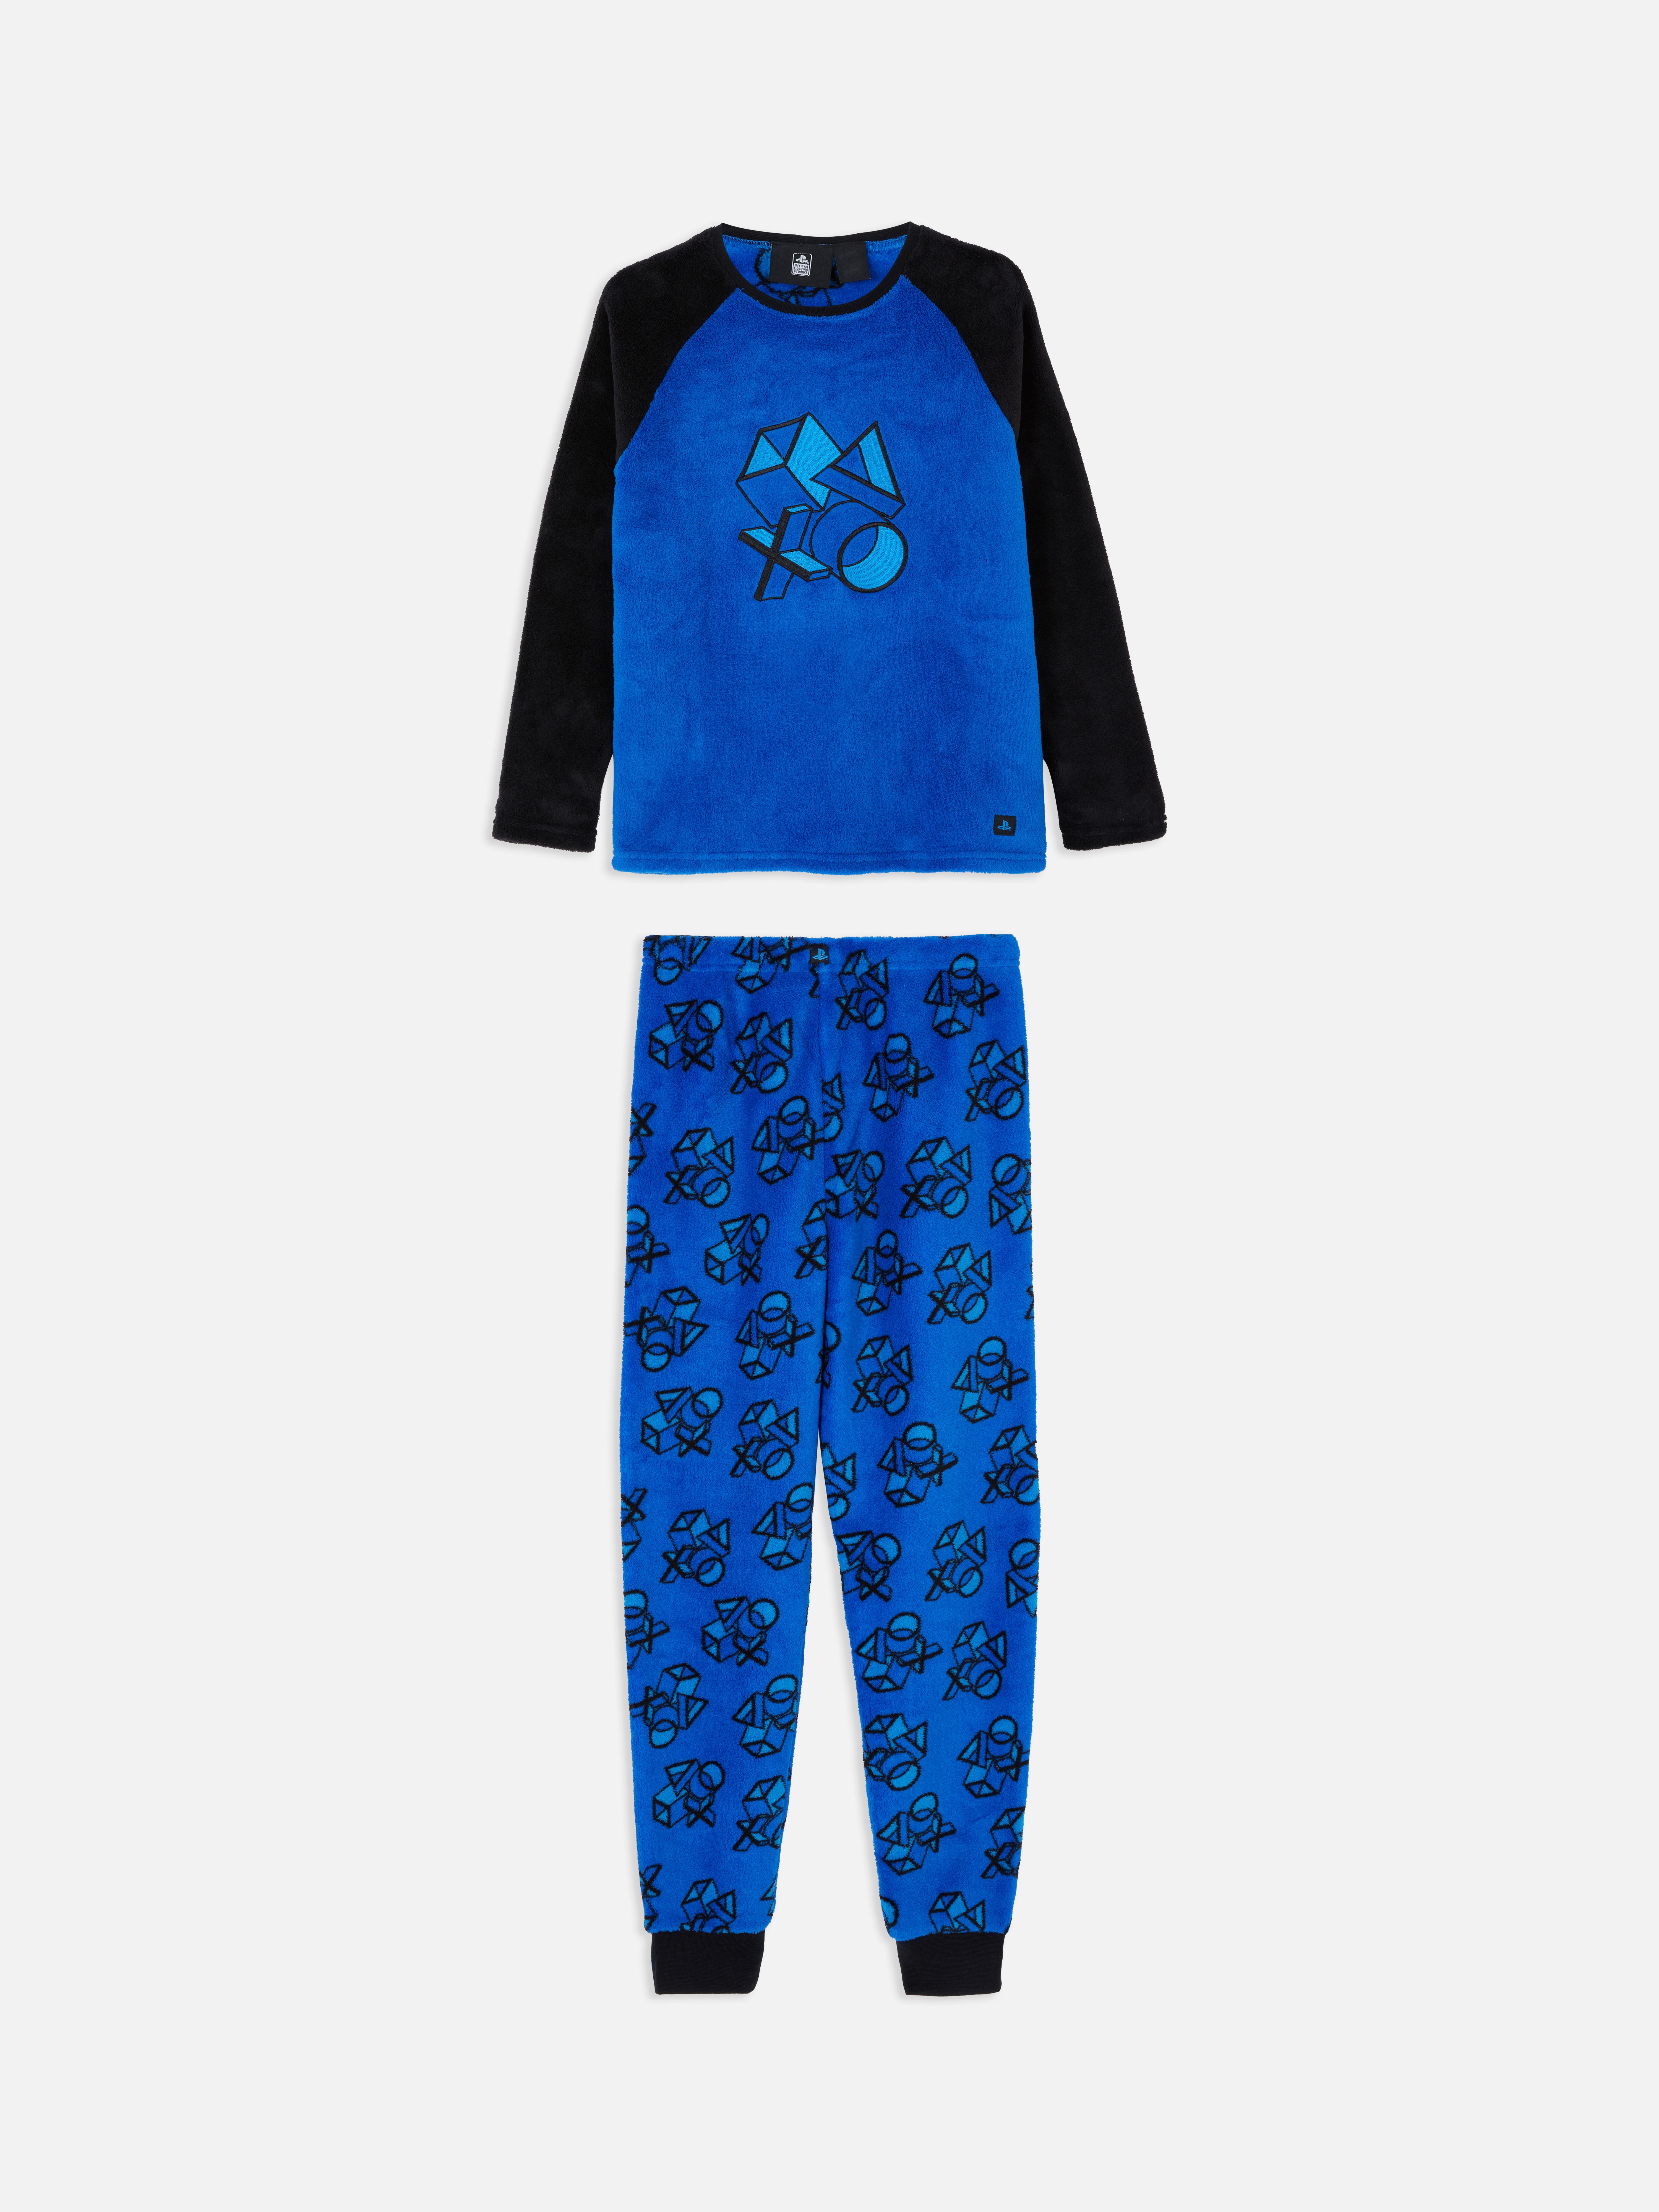 PlayStation Fleece Pyjamas